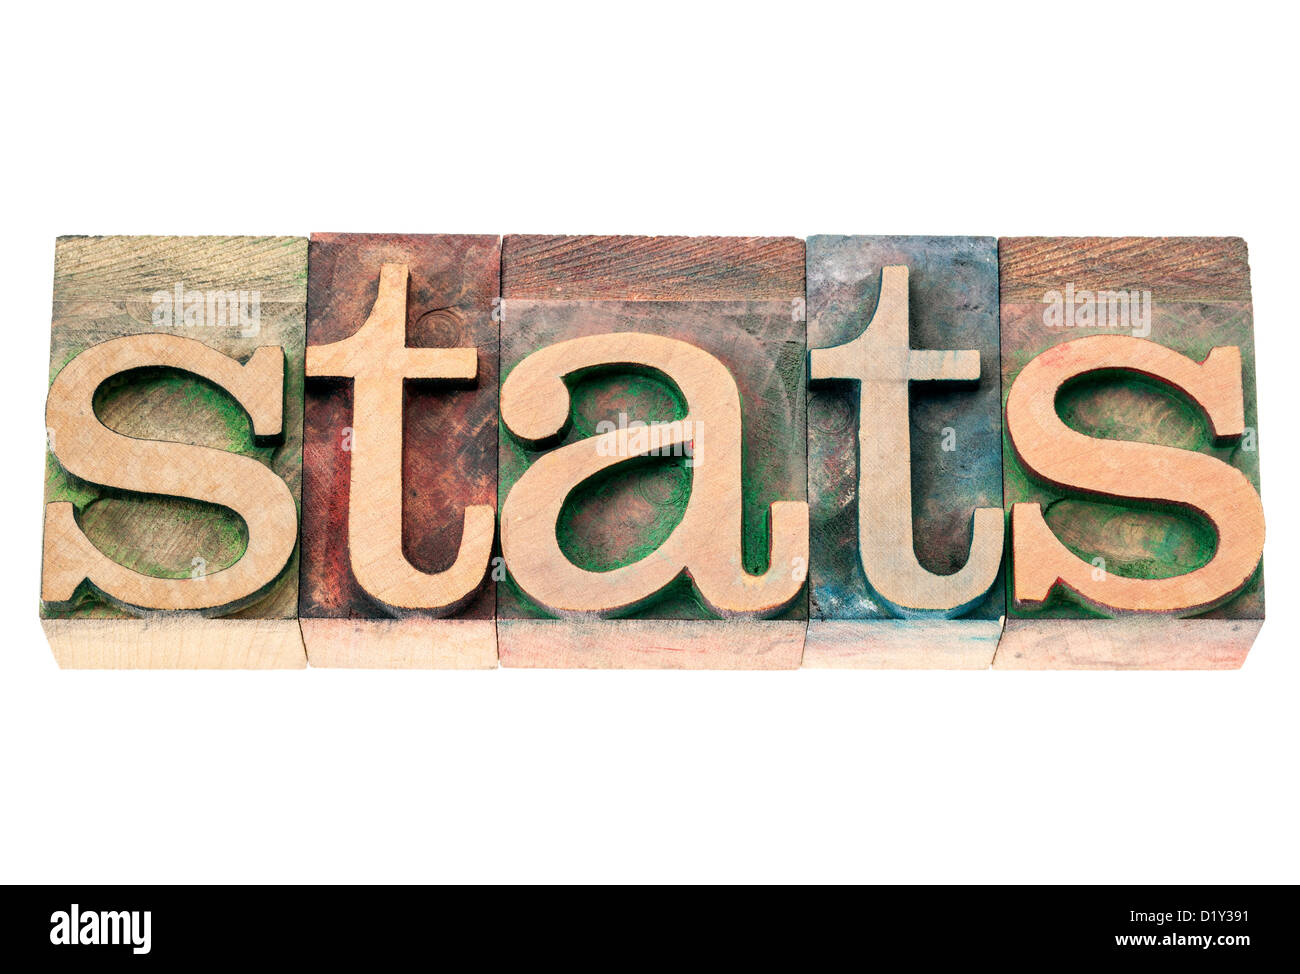 stats (statistics) - isolated word in vintage letterpress wood type printing blocks Stock Photo